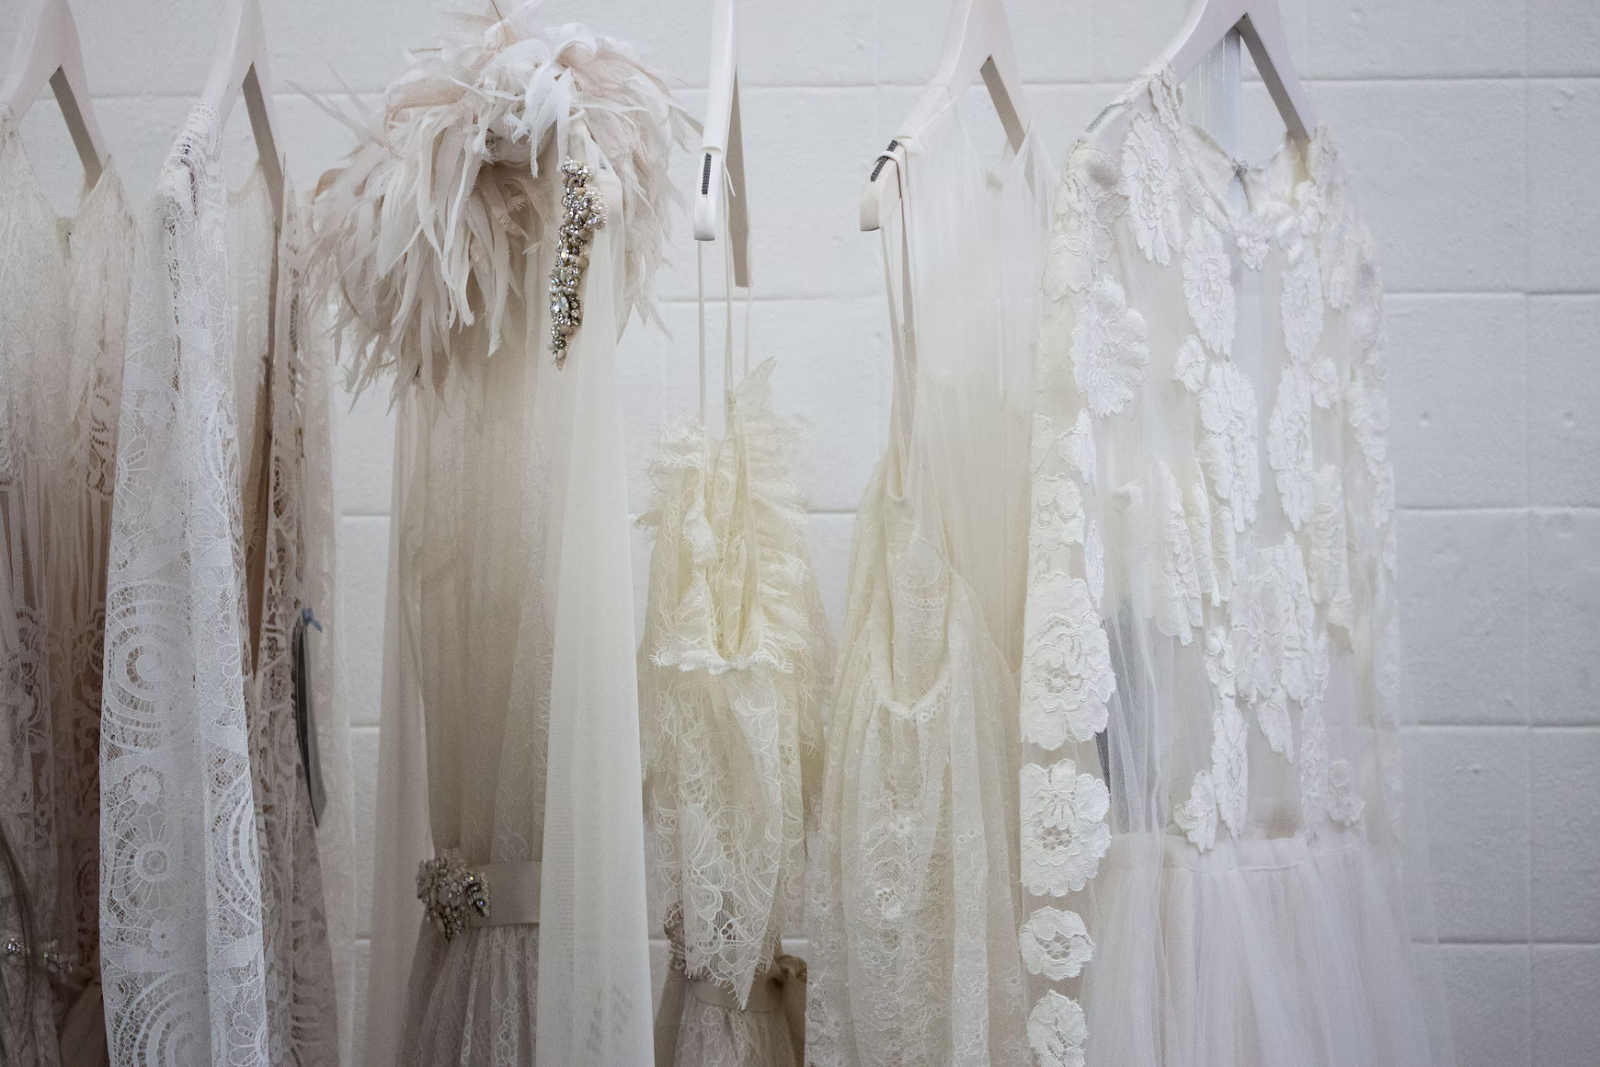 White wedding dresses hanging on hangers